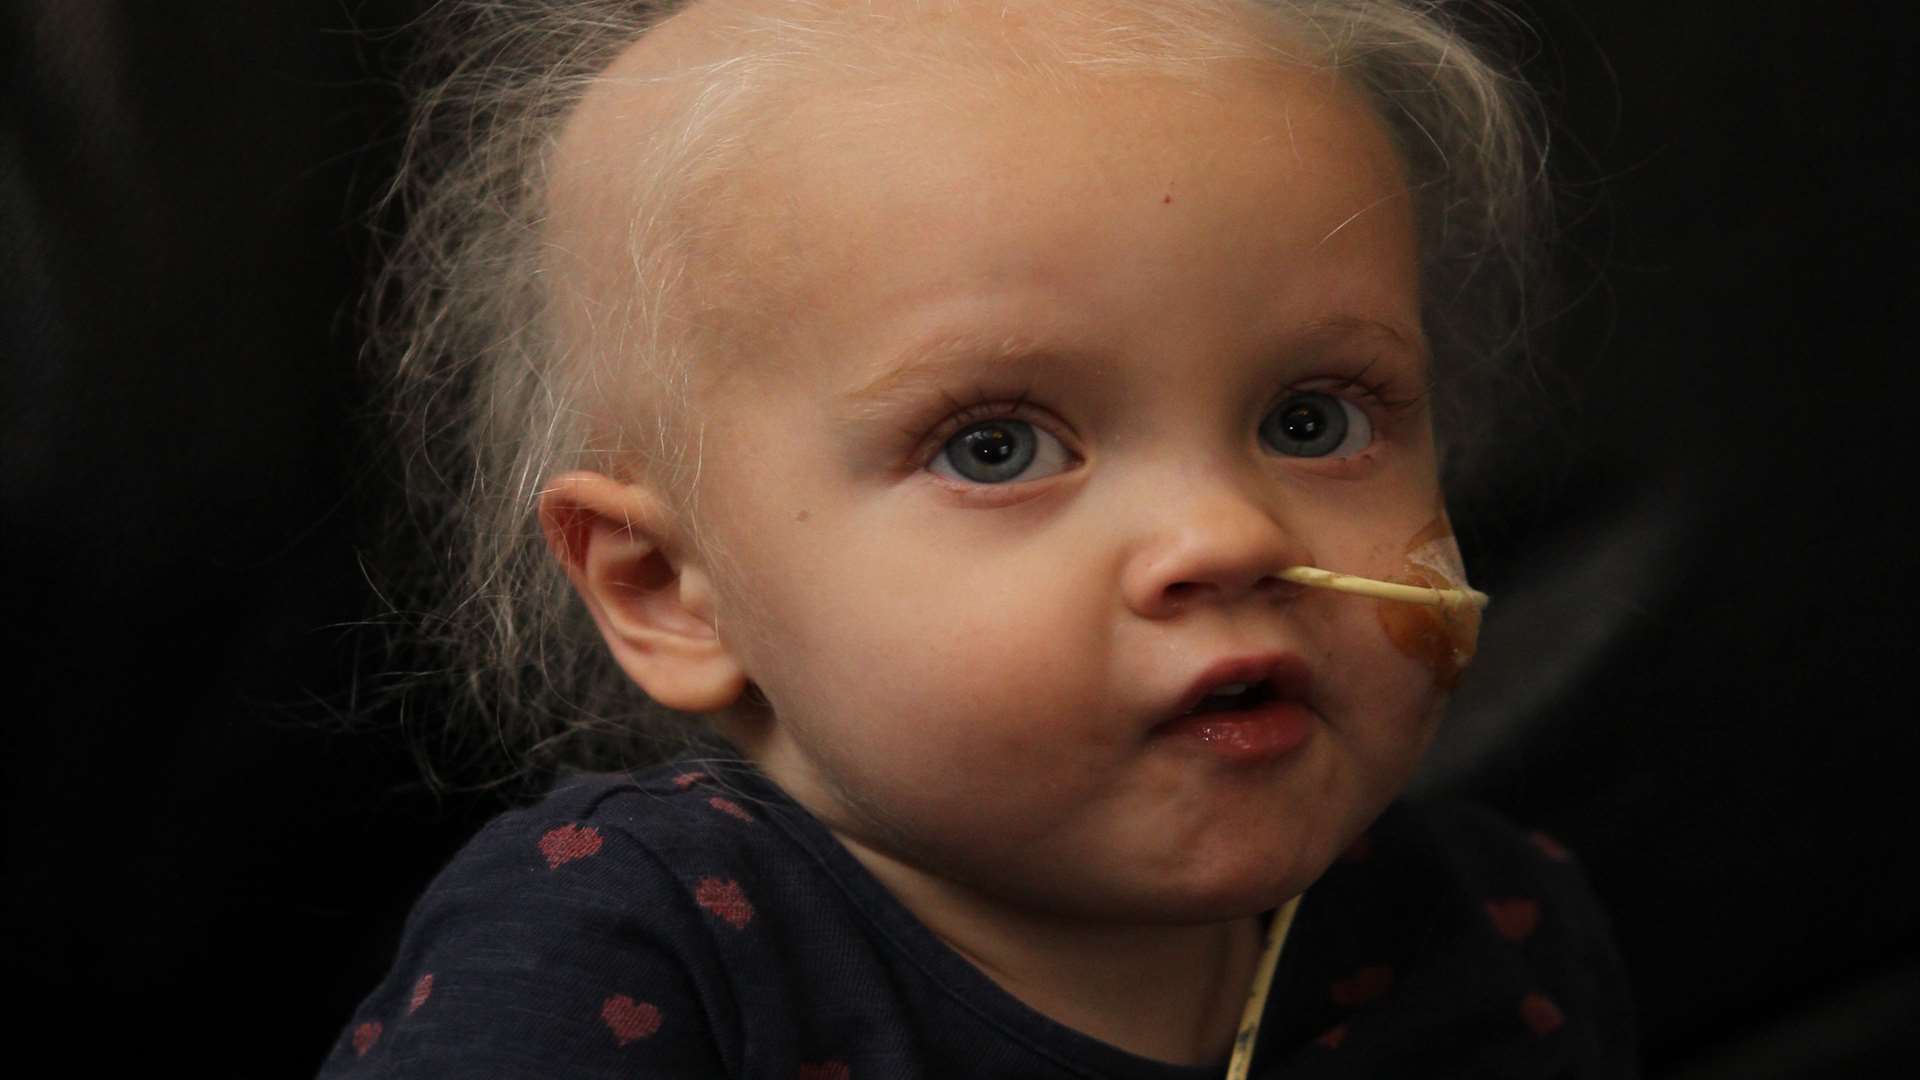 Ruby Young, two, from Rainham has Neuroblastoma